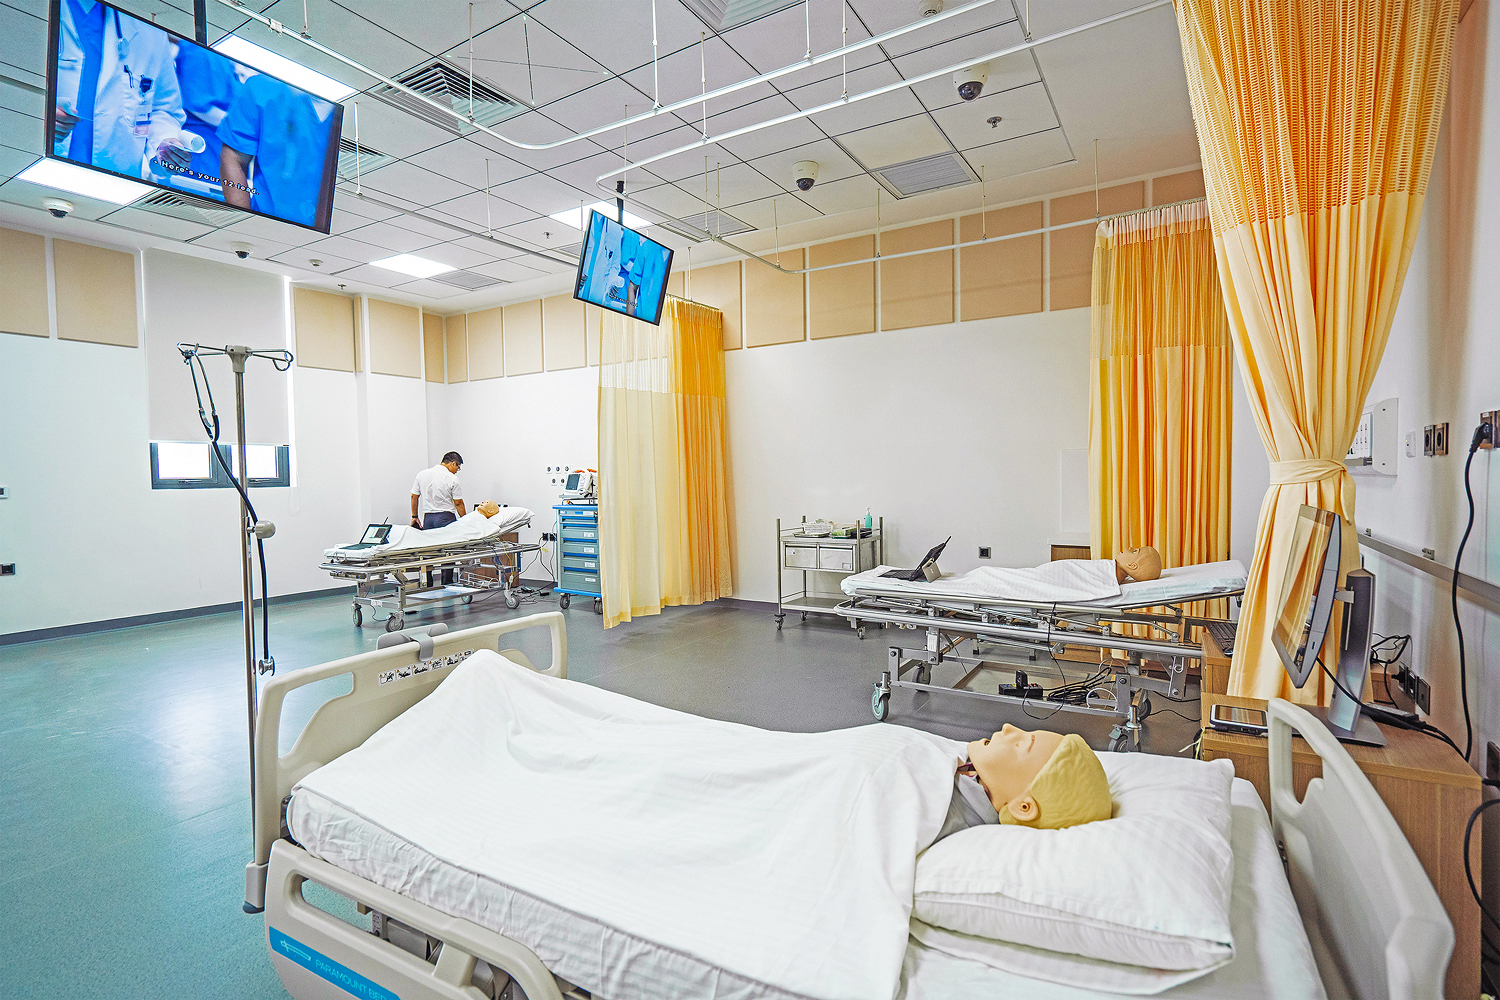 VinUni 大学的医学楼内汇集了各种不同规格的房间、诊疗室和仿真模拟急救设施